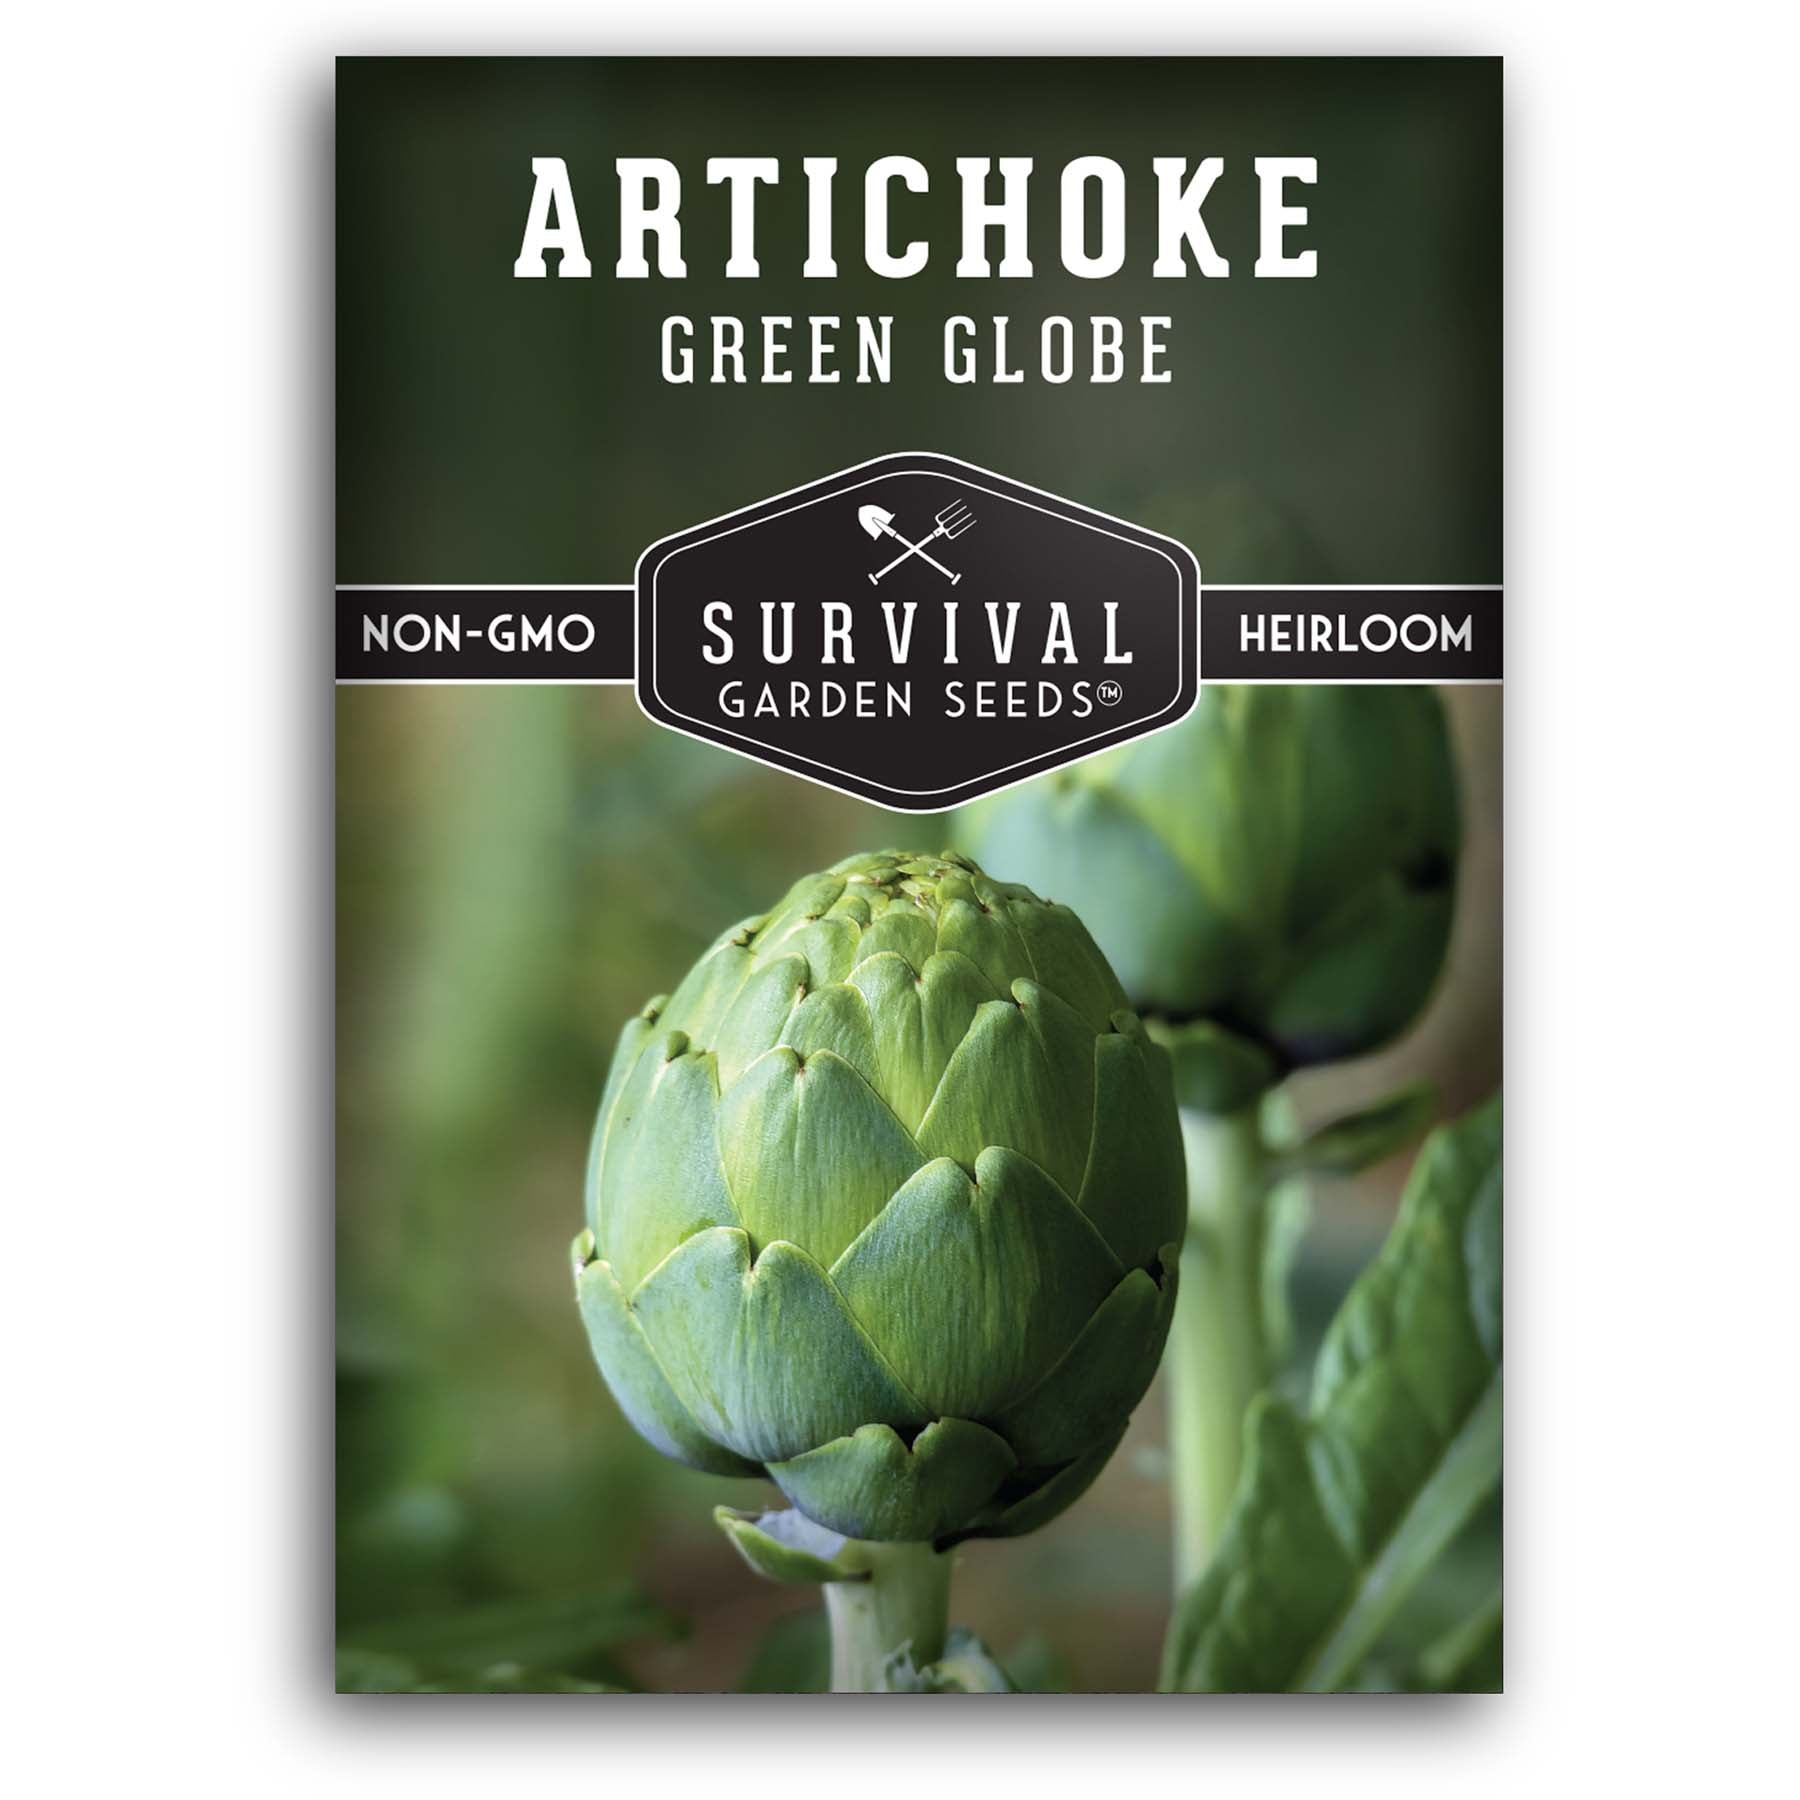 Green Globe Artichoke seeds for planting